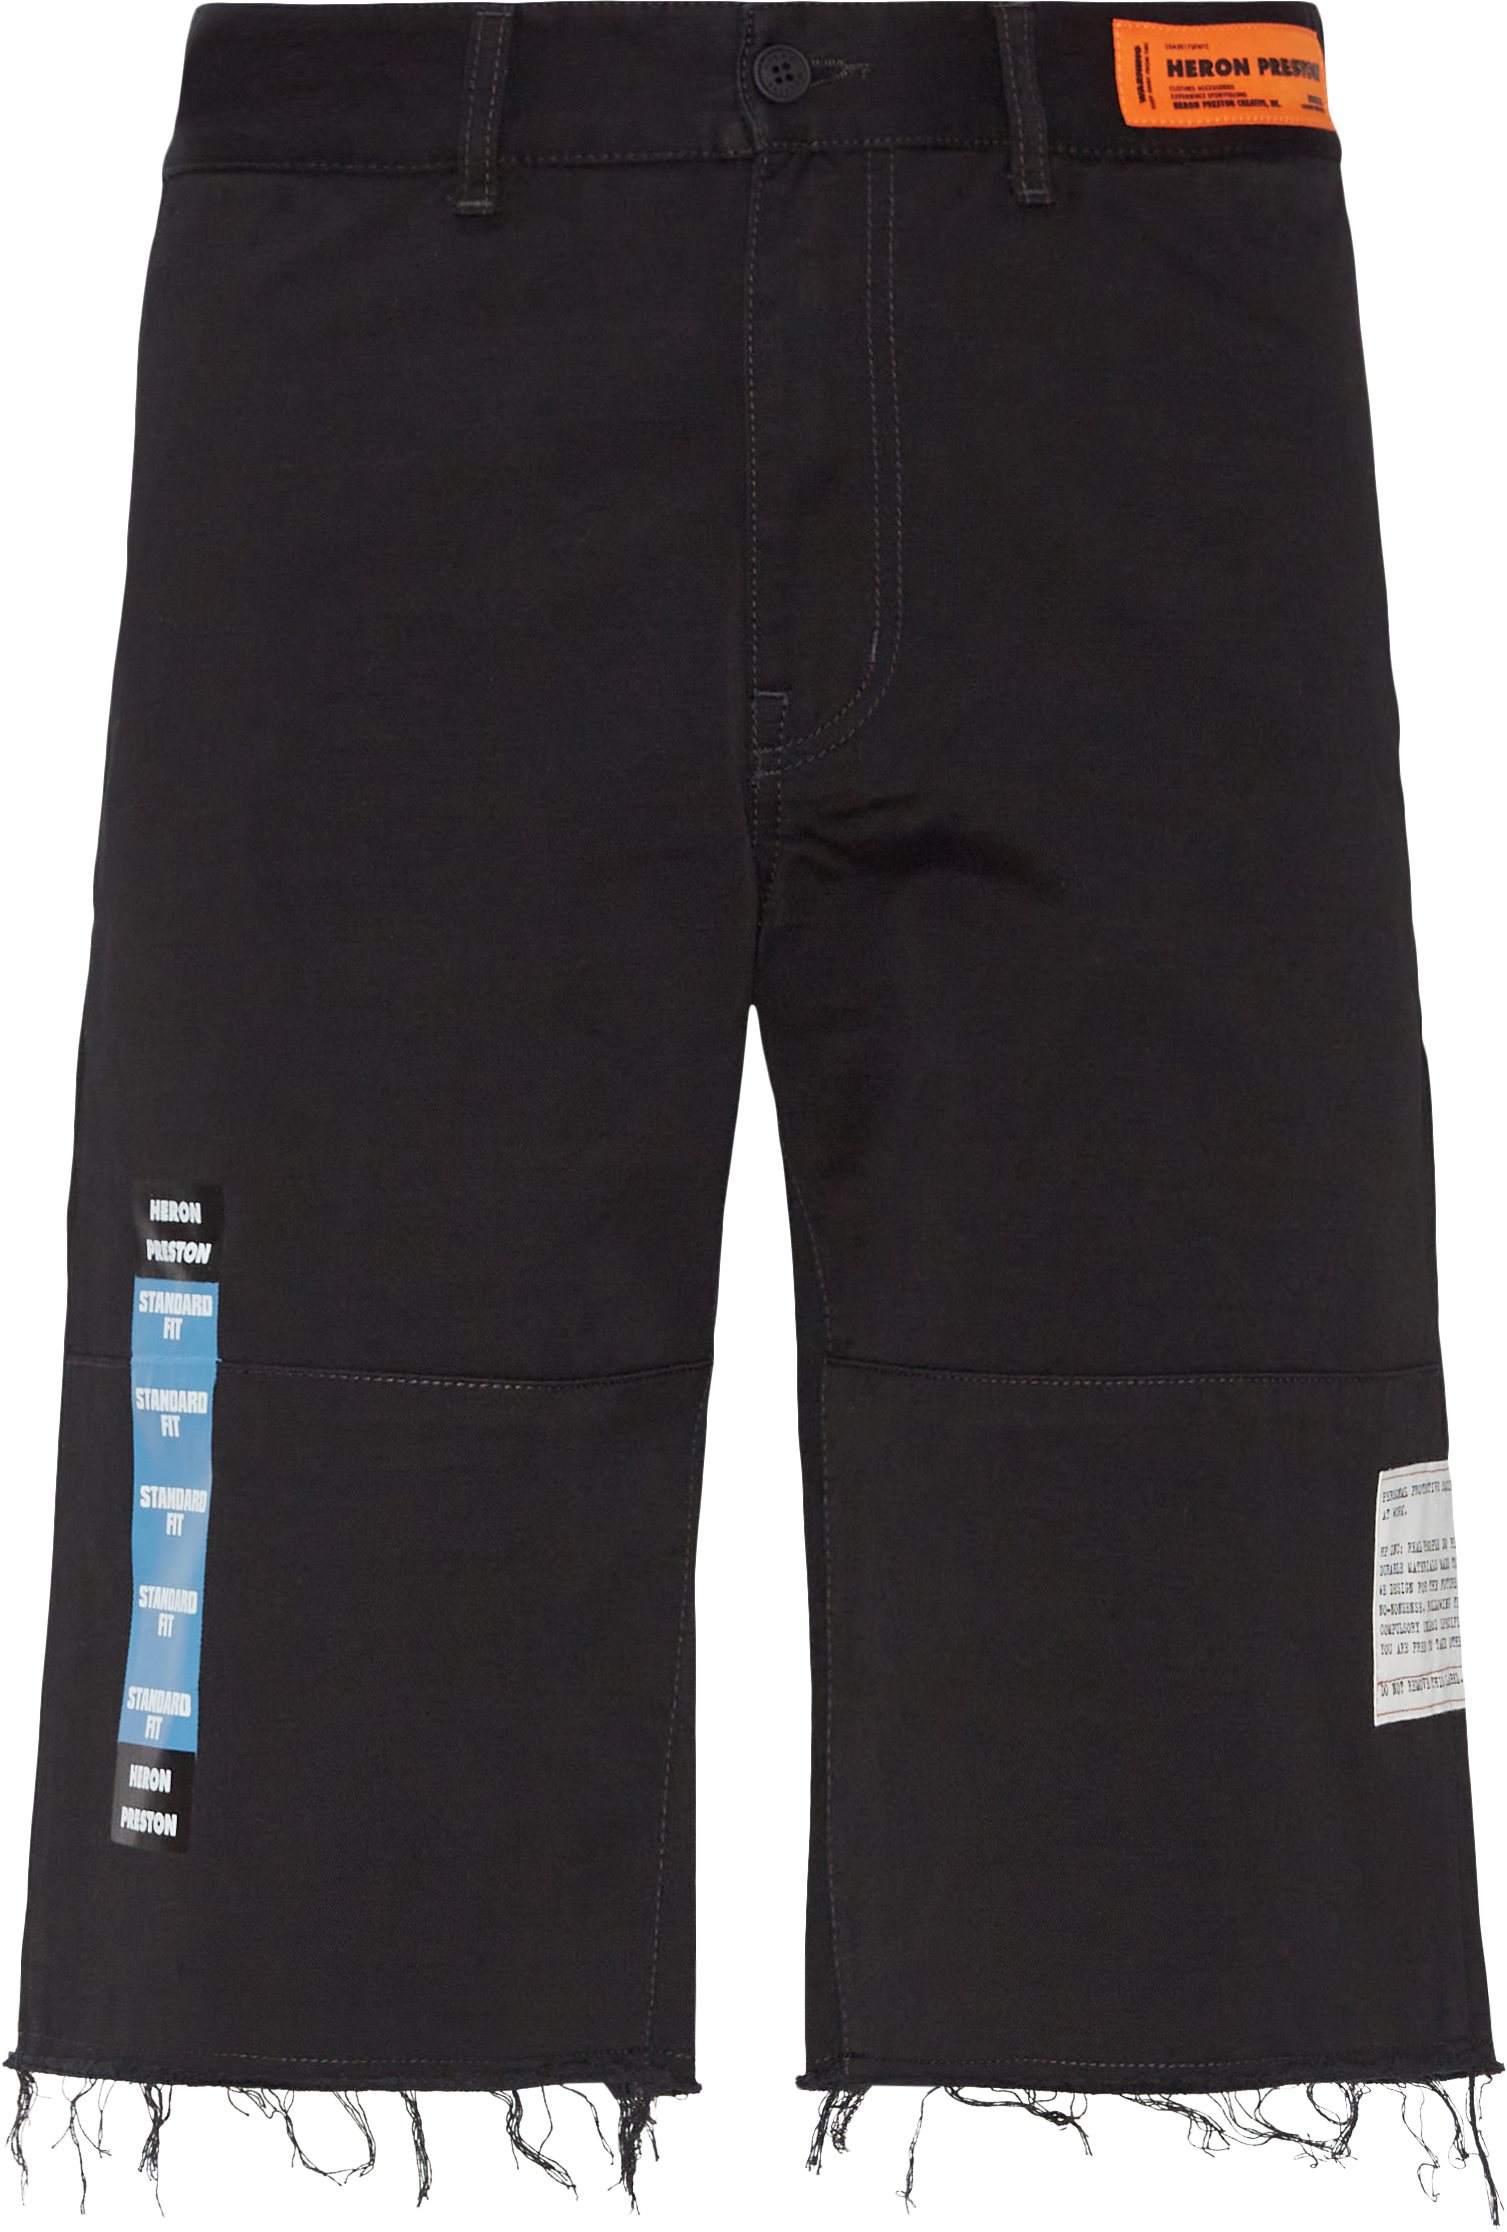 Raw Edge Shorts - Shorts - Comfort fit - Sort